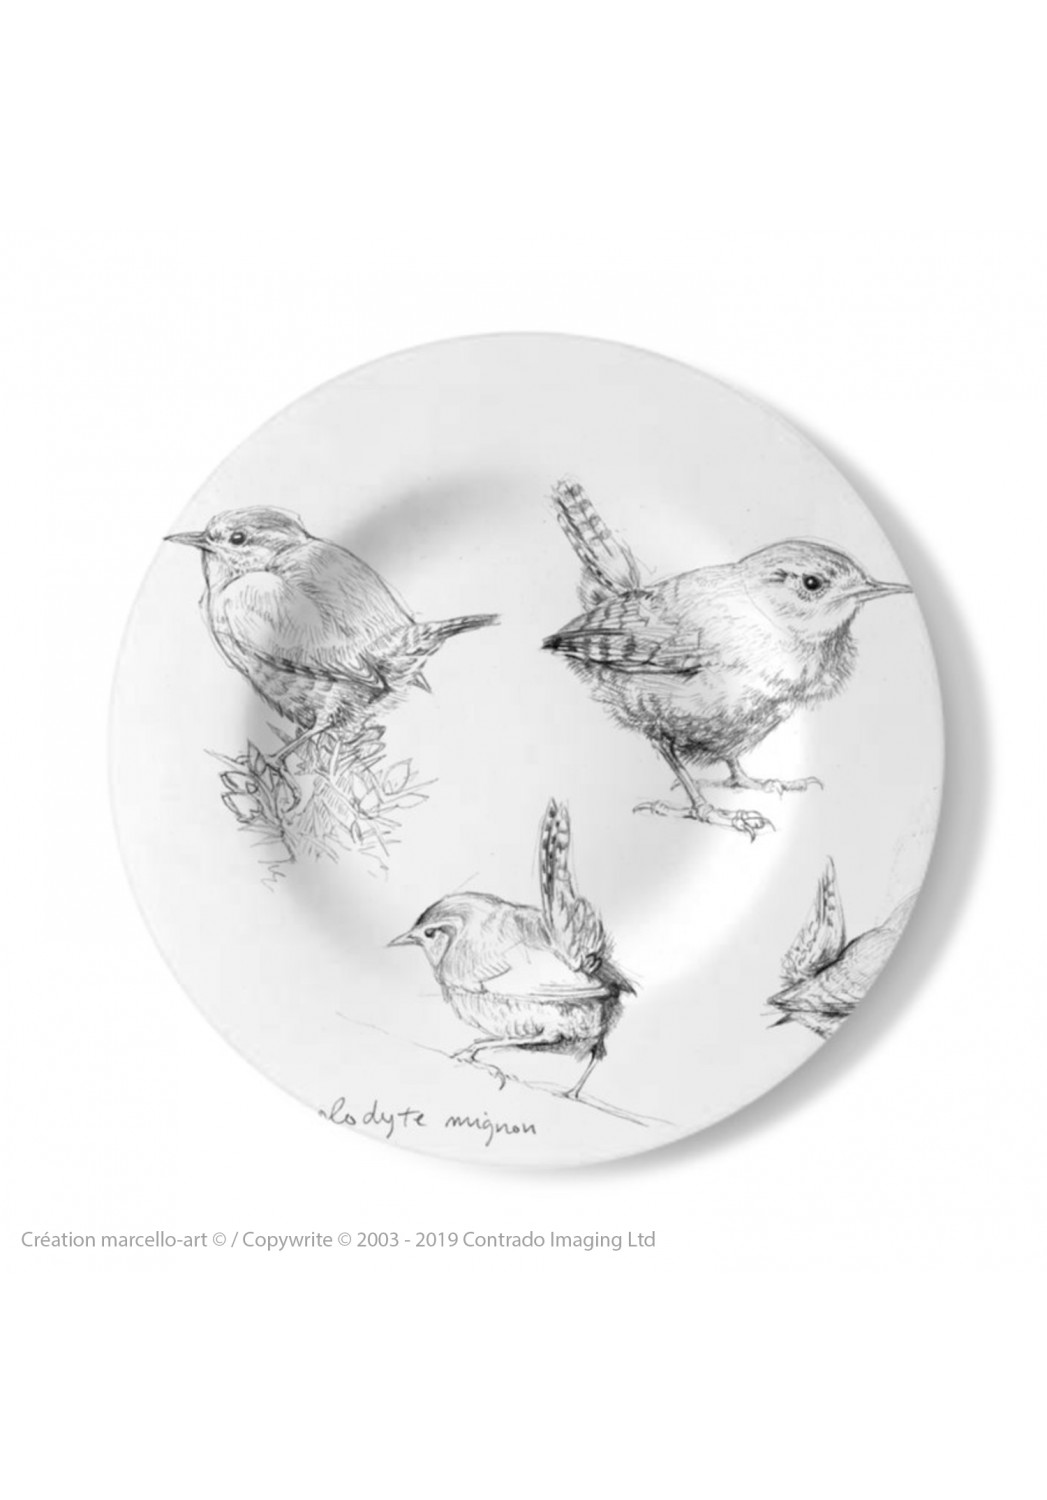 Marcello-art: Decorating Plates Decoration plates 212 Cute cave dweller